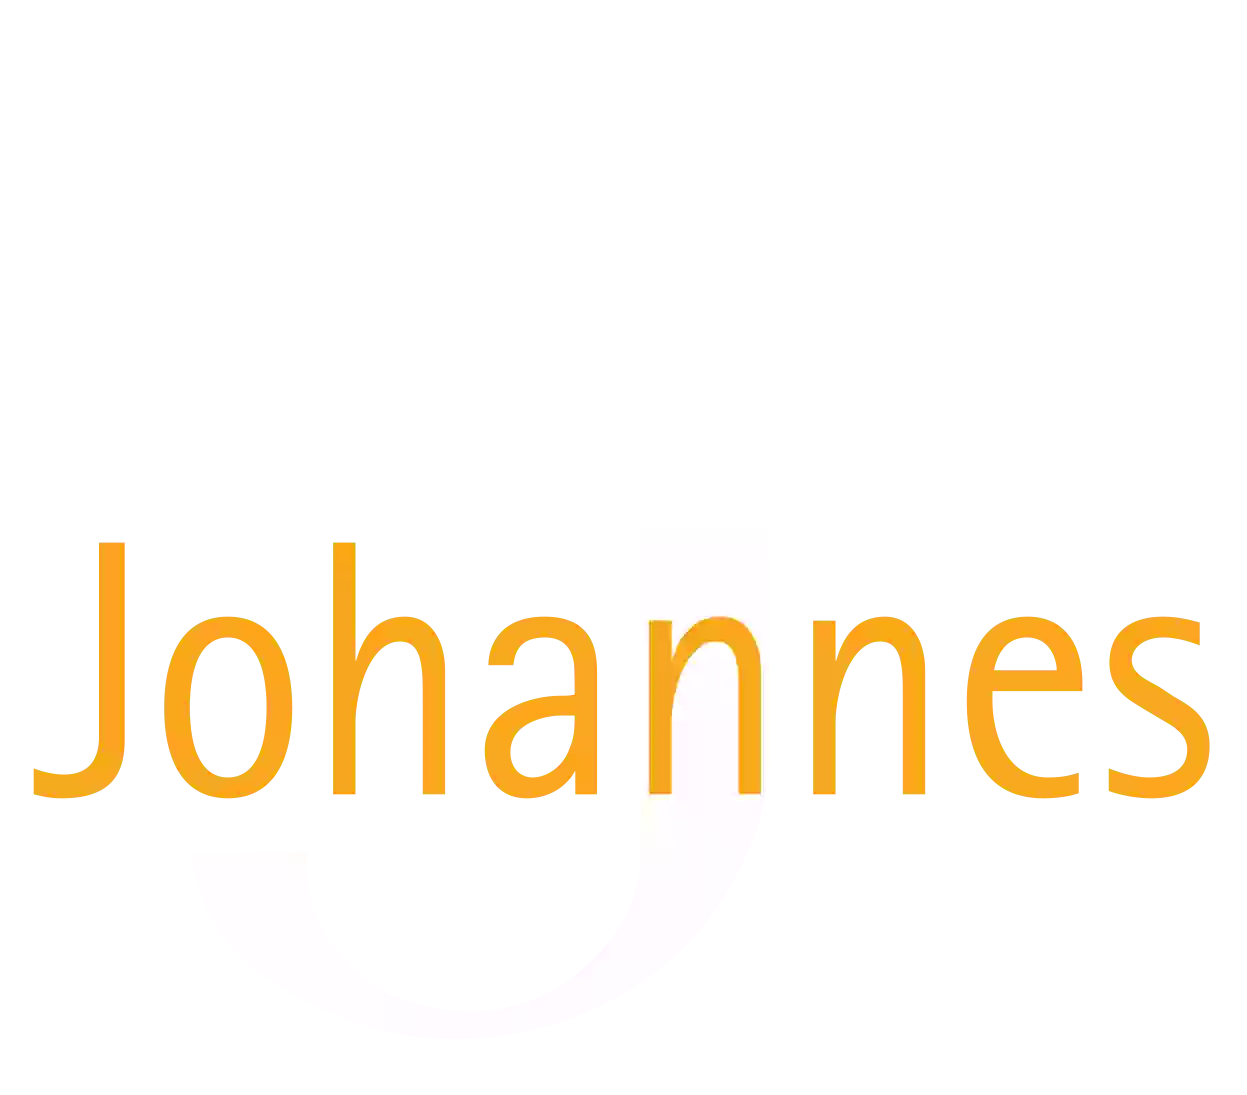 Johannes